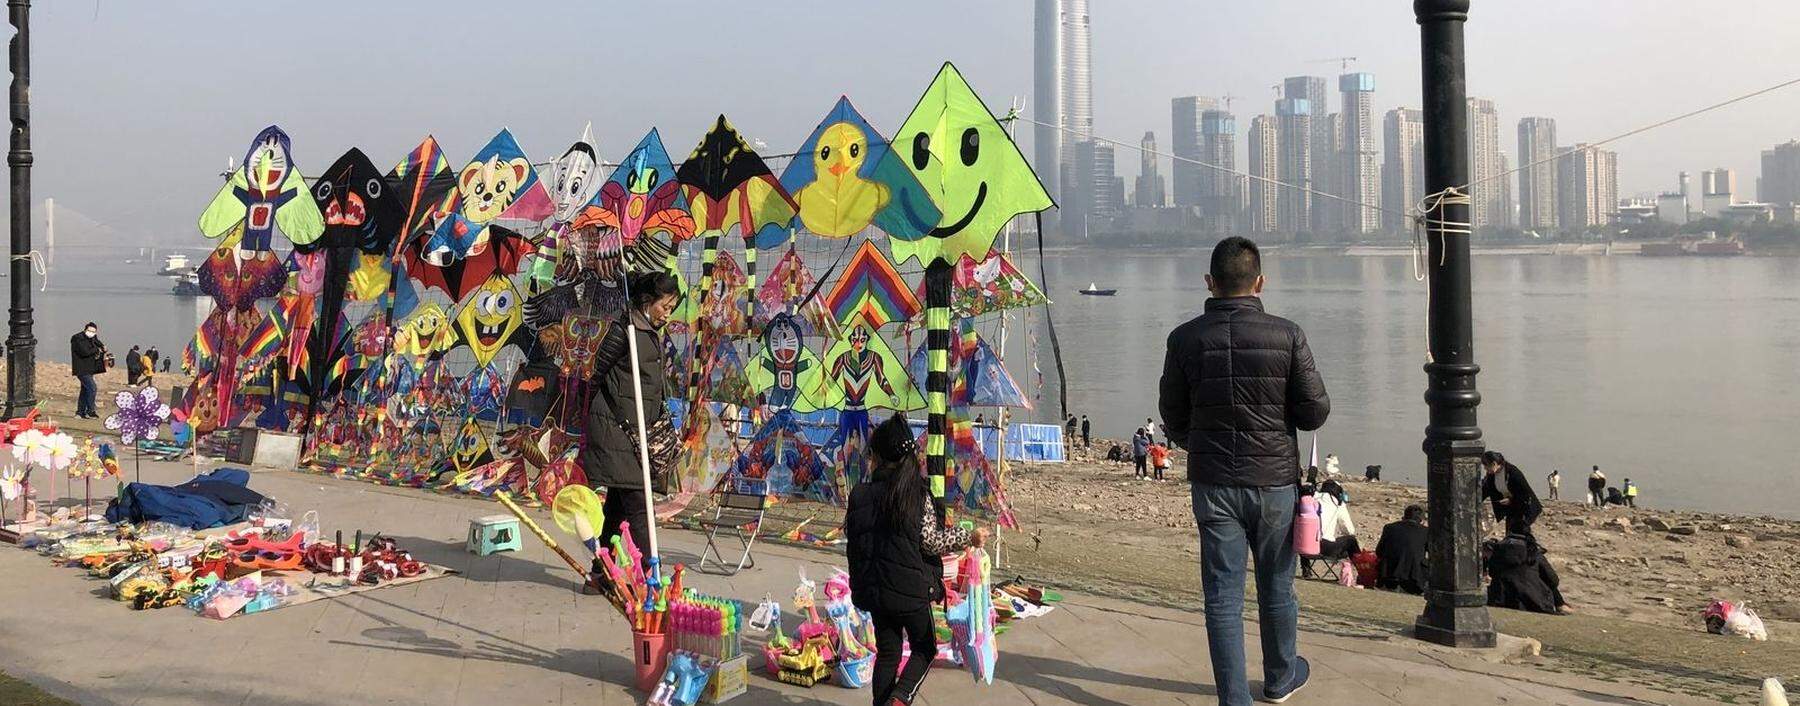 Dezember in Wuhan: Am Flussufer des Jangtse werden bunte Drachen verkauft.